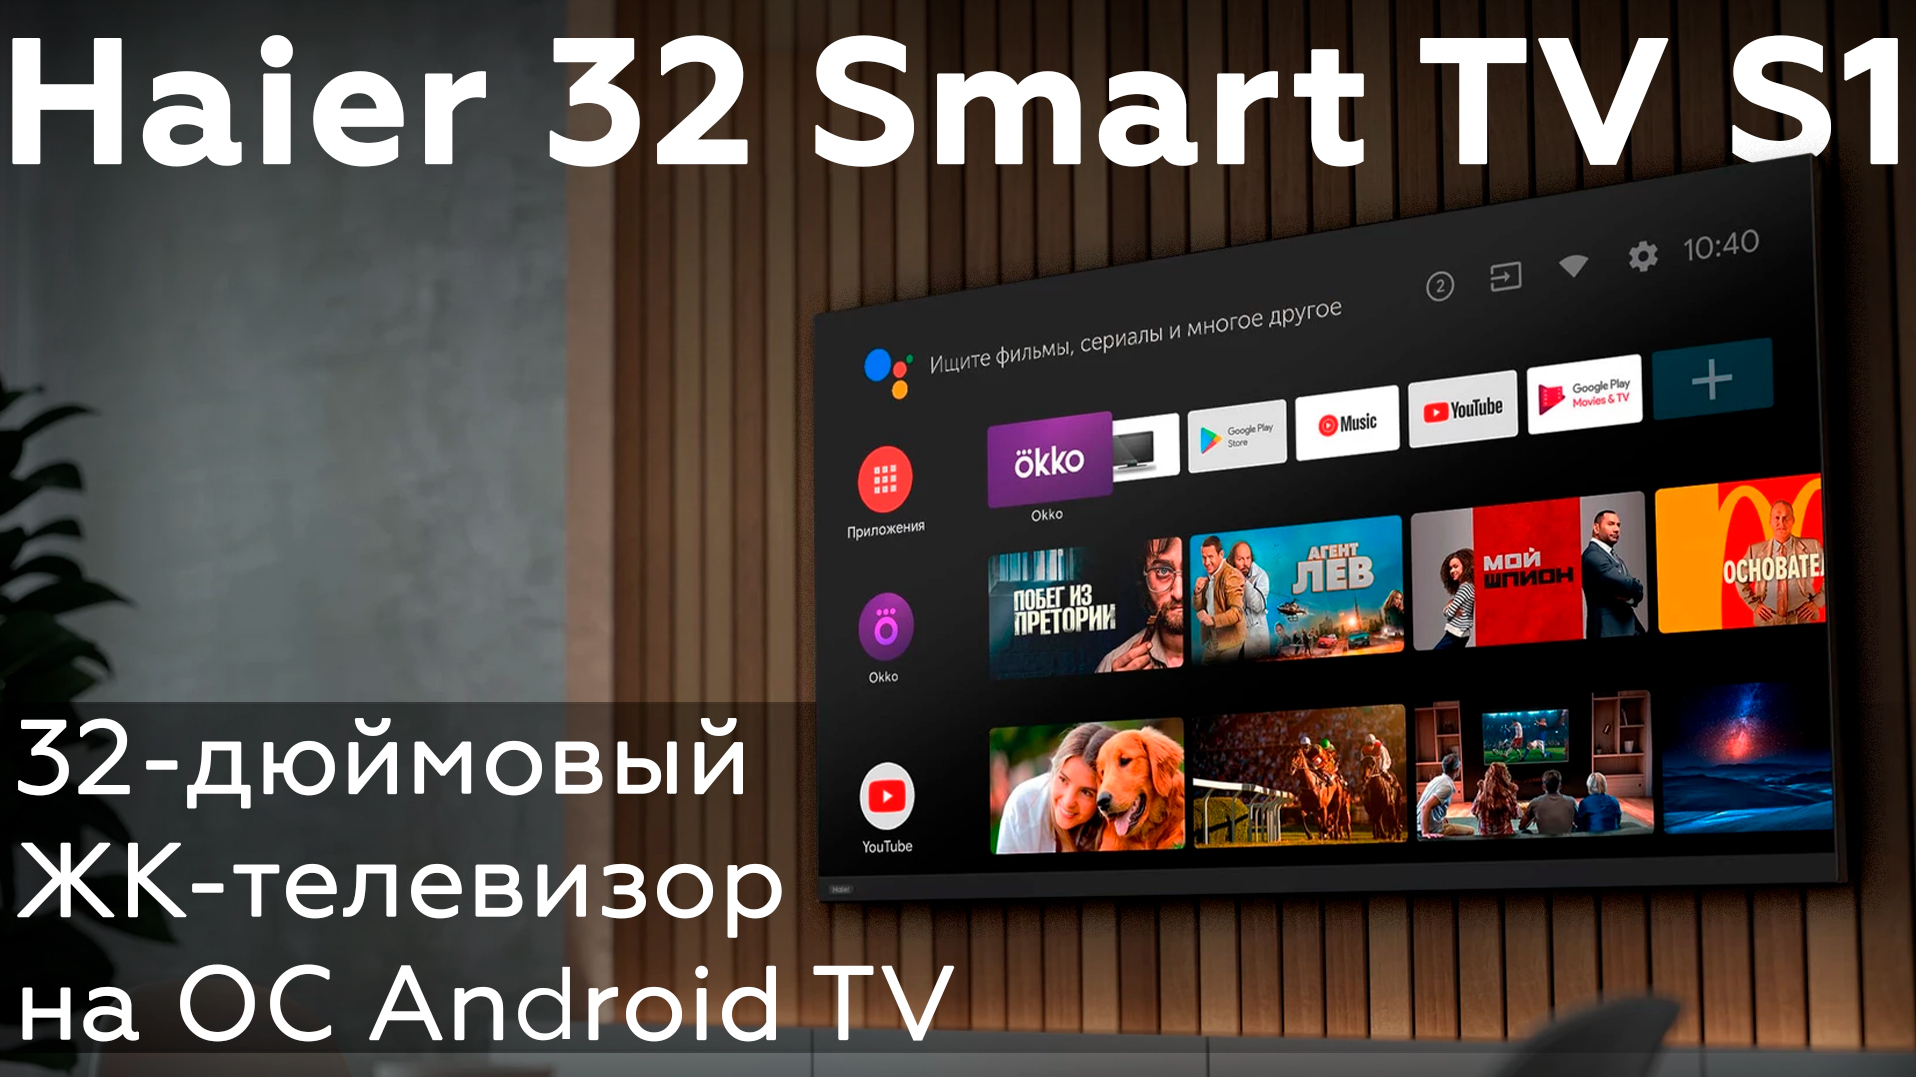 Haier 32 Smart TV S1: 32-дюймовый FullHD ЖК-телевизор на ОС Android TV